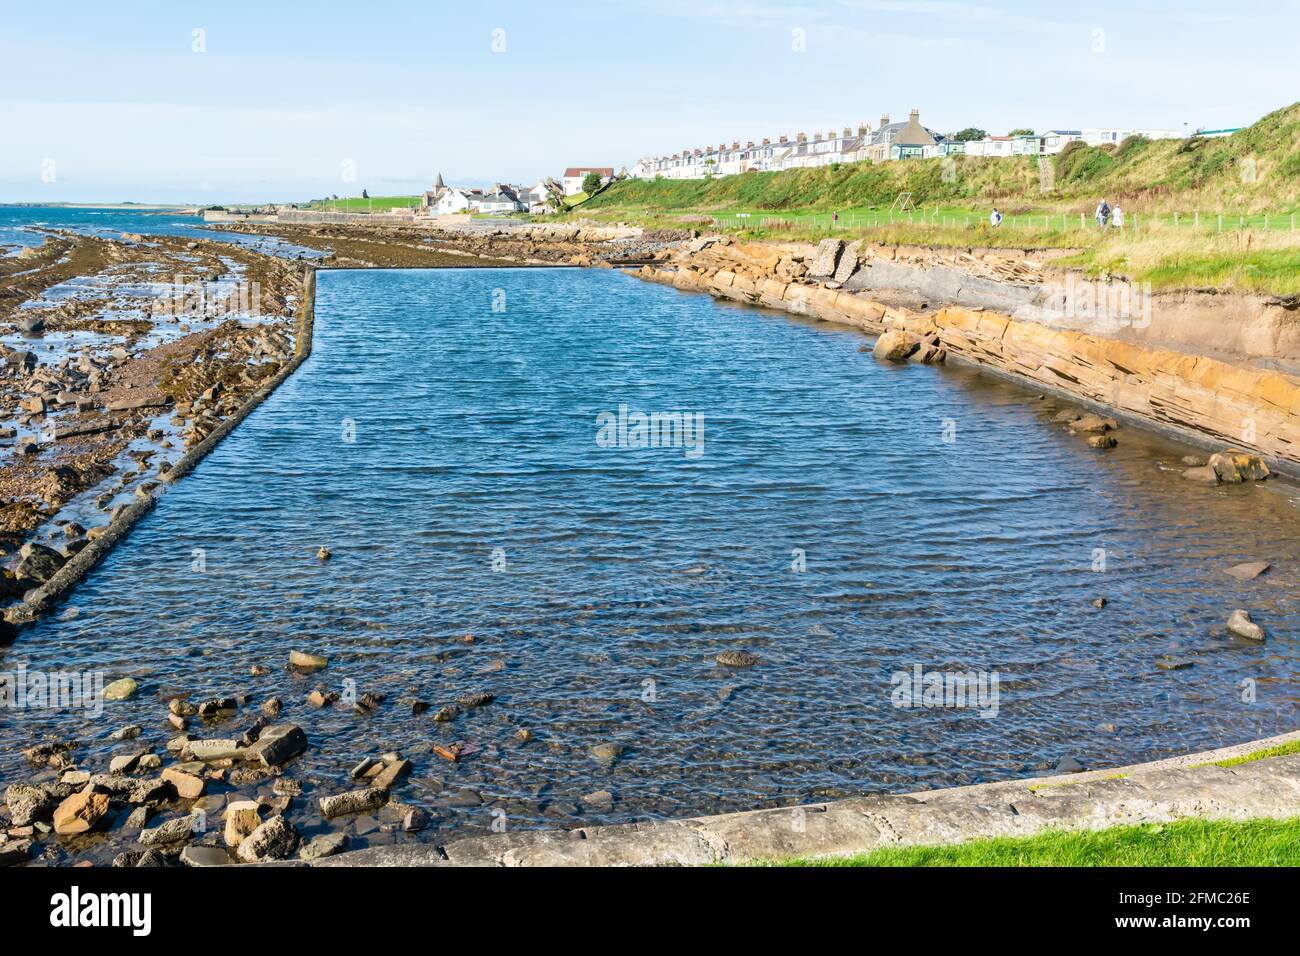 Rock pool along the seashore in St Monans fishing village in the East Neuk of Fife in Scotland. Stock Photo